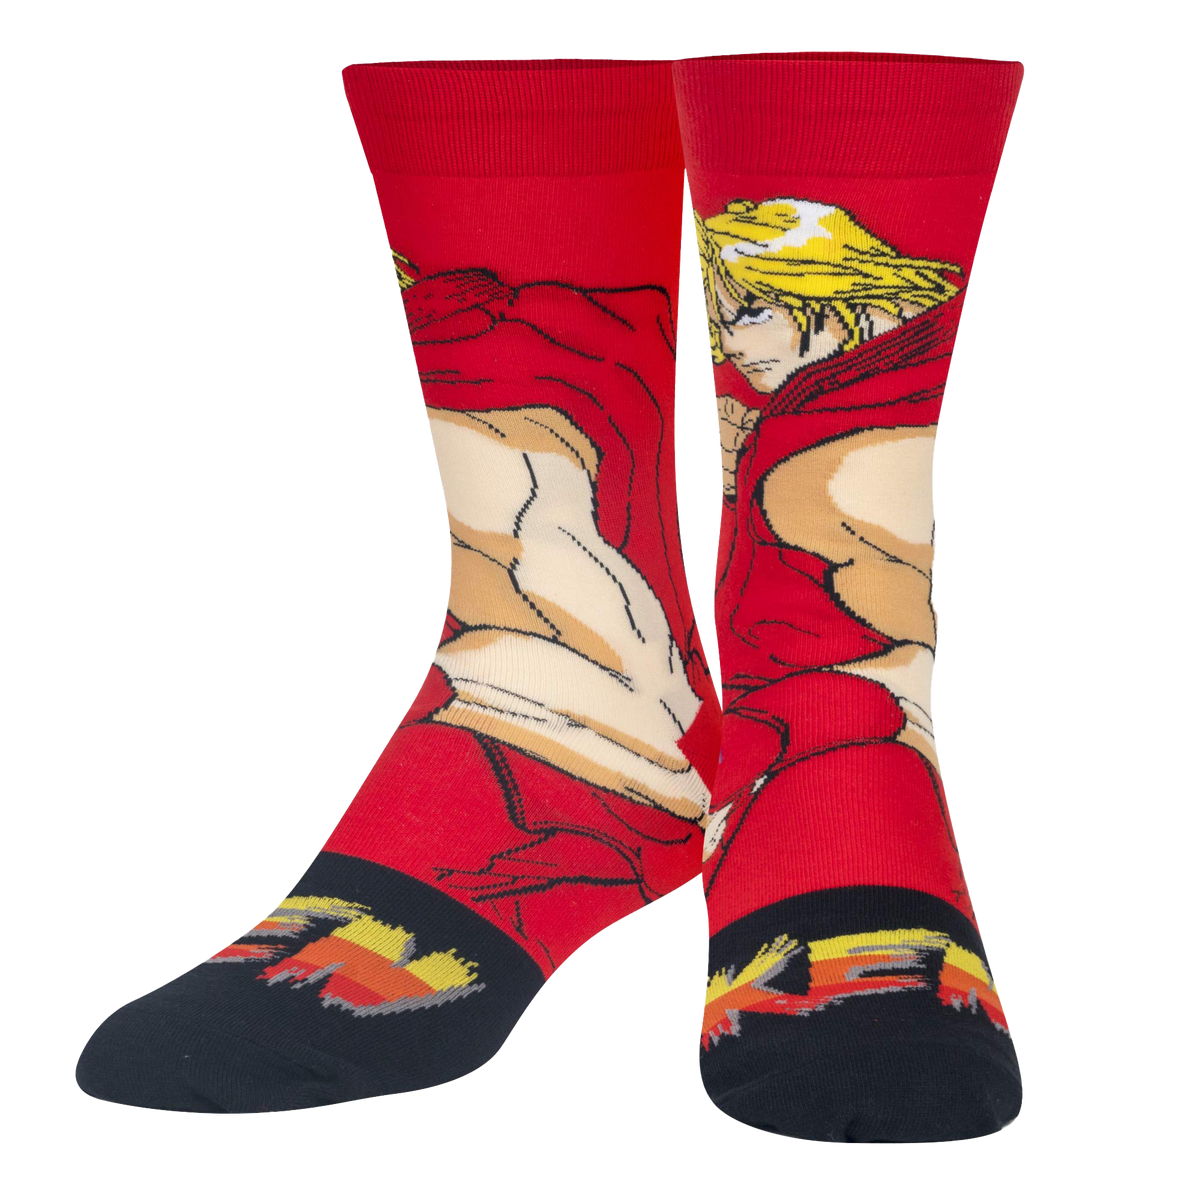 Street Fighter Ken Socks